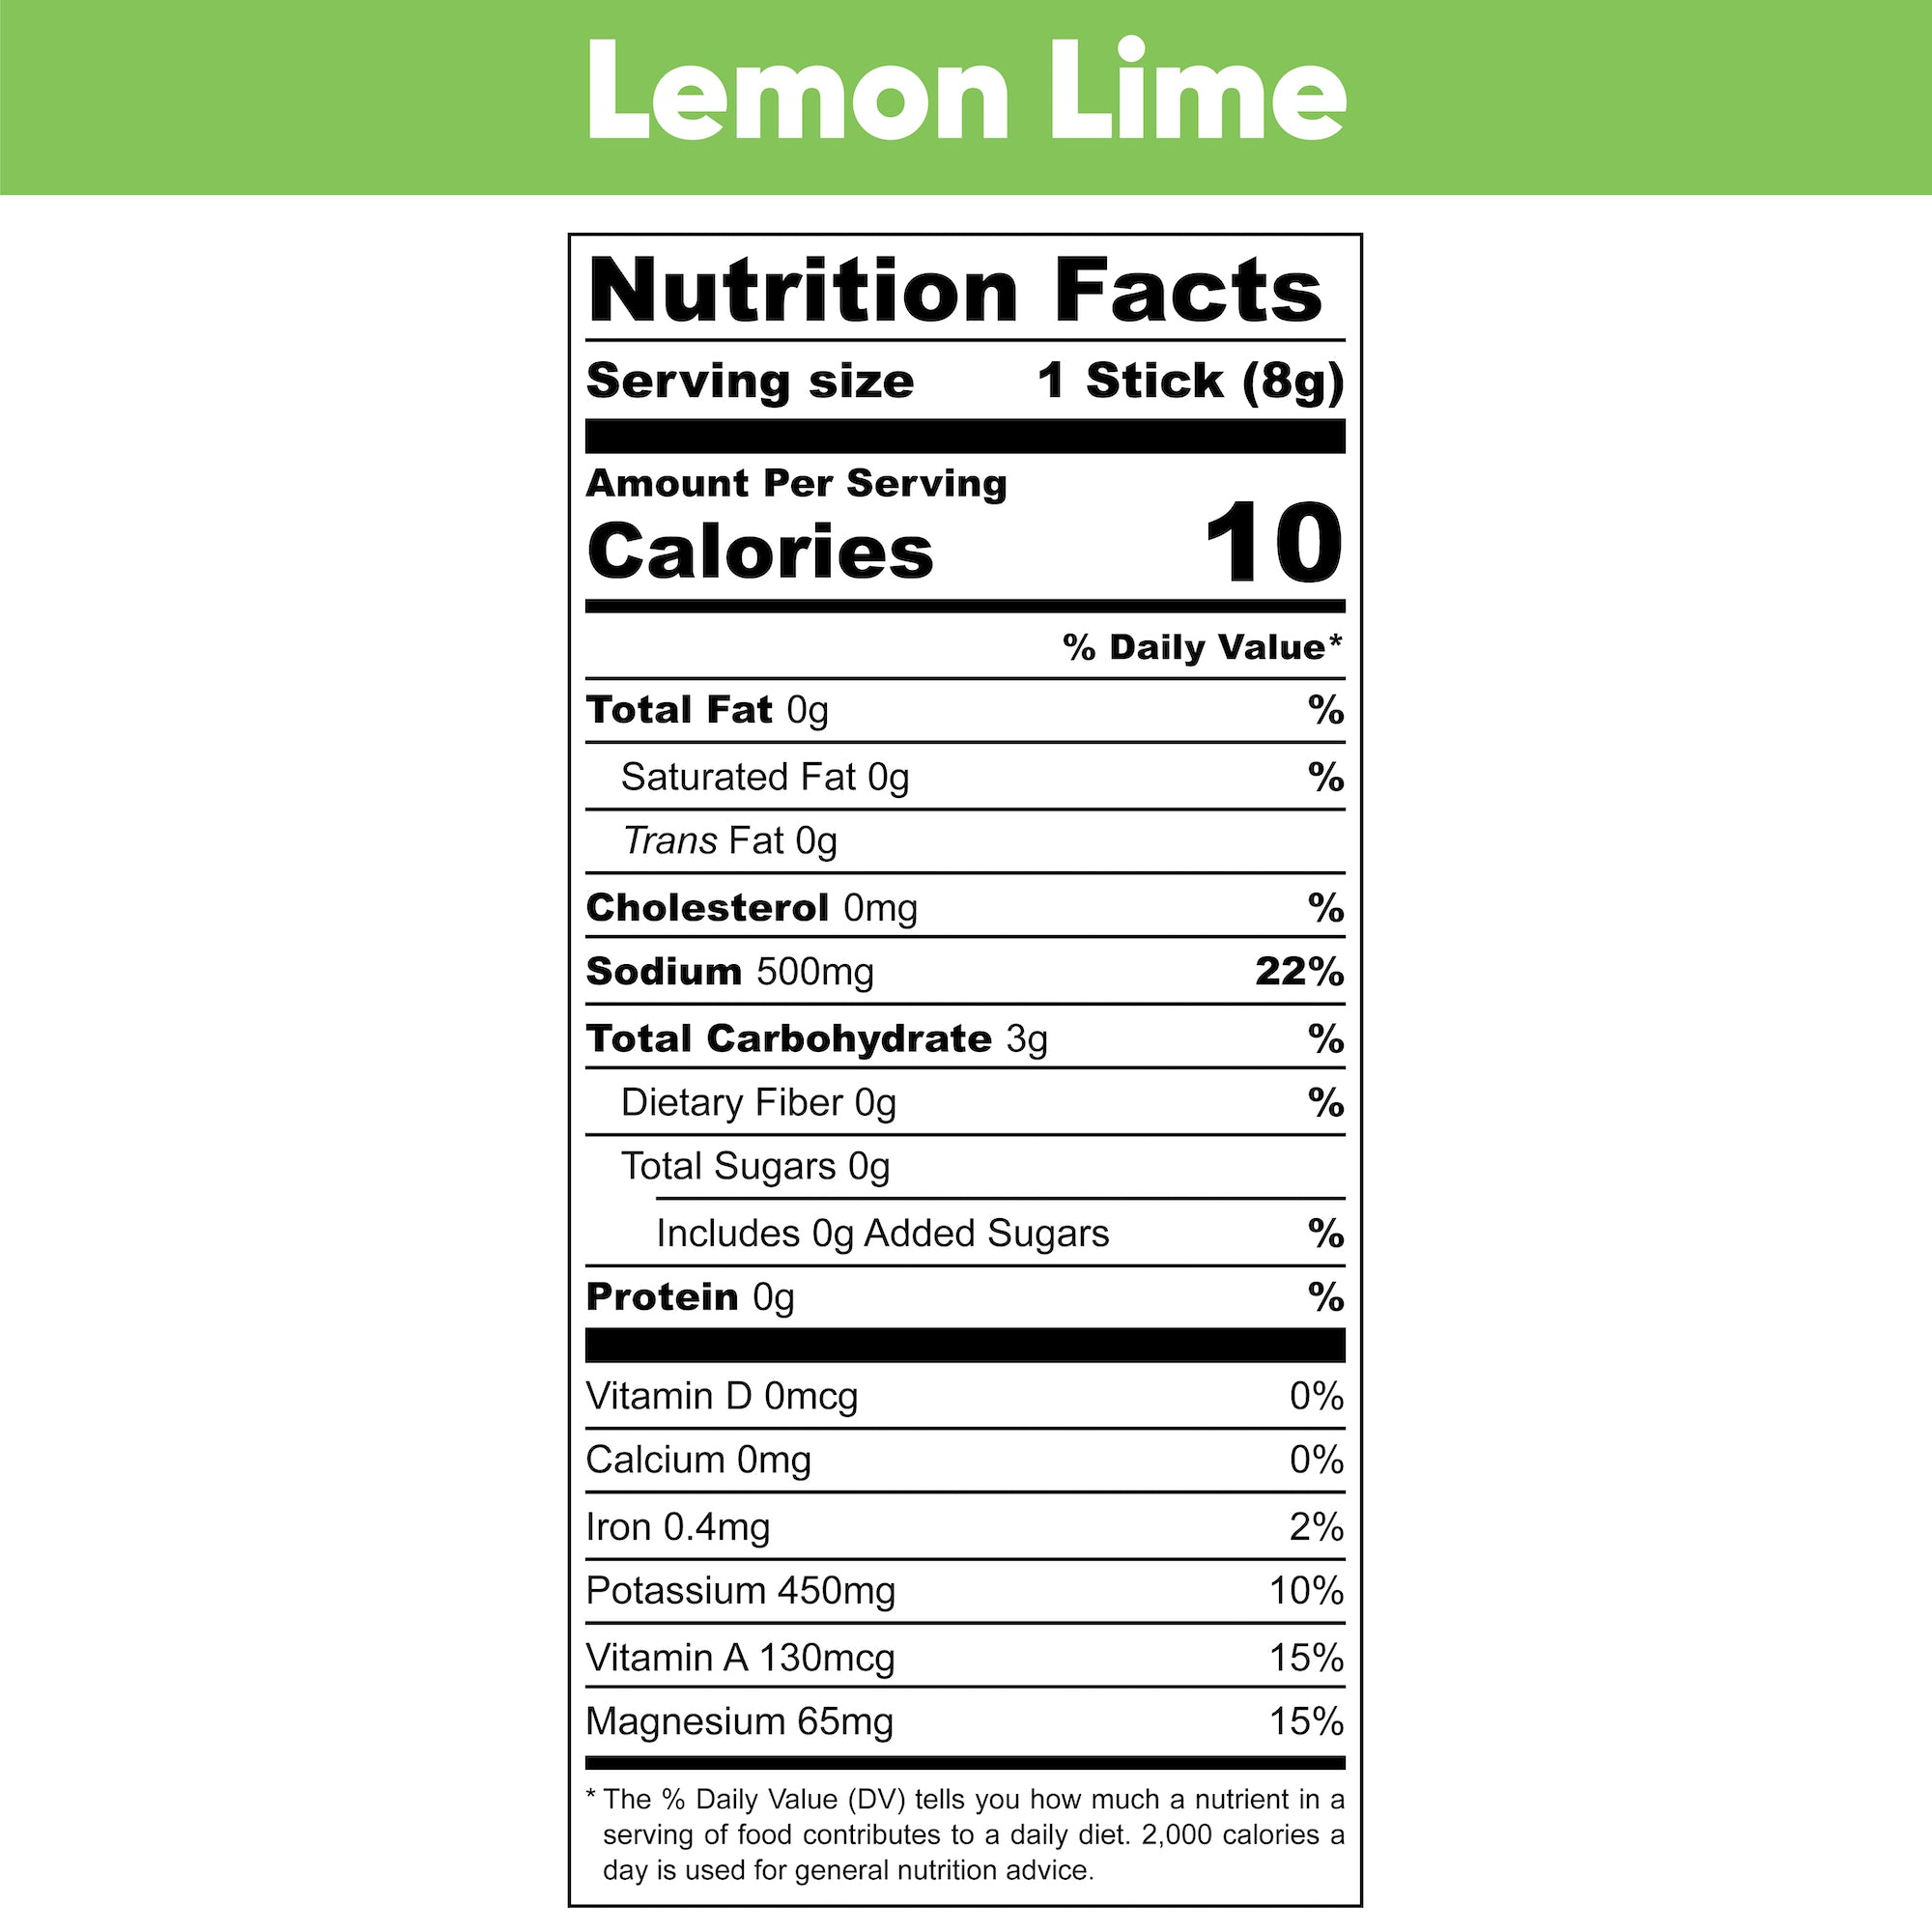 Lemon Lime Nutrition Facts. Serving Size: 1 Stick (5 grams). Amount Per Serving. Calories: 10. % Daily Value. Total Fat: 0 grams, 0%. Saturated Fat: 0 grams, 0%. Trans Fat: 0 grams. Cholesterol: 0 milligrams, 0%. Sodium: 500 milligrams, 22%. Total Carbohydrate: 1 gram, 0%. Dietary Fiber: 0 grams, 0%. Total Sugars: 0 grams. Includes: 0 grams Added Sugars, 0%. Protein: 0 grams, 0%. Vitamin D: 0 micrograms, 0%. Calcium: 0 milligrams, 0%. Iron: 0.4 milligrams, 2%. Potassium: 380 milligrams, 8%. Vitamin A: 130 micrograms, 15%. Magnesium: 60 milligrams, 15%.